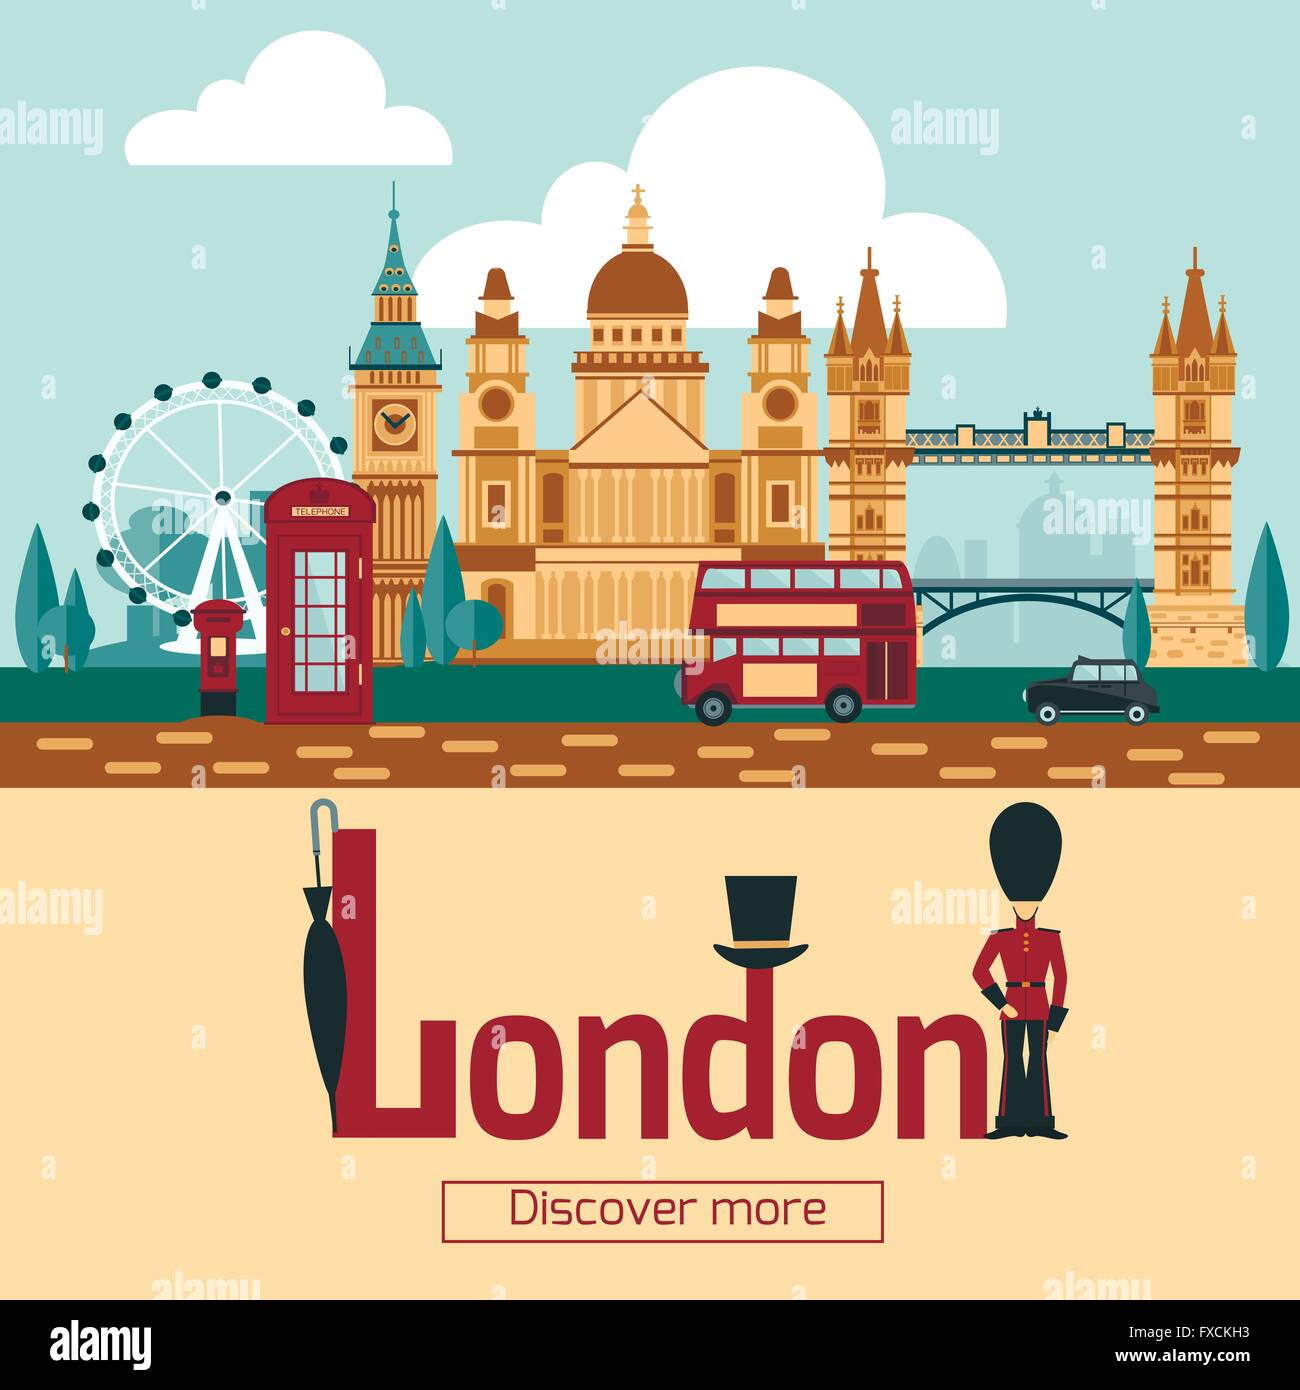 London Touristic Poster Stock Vector